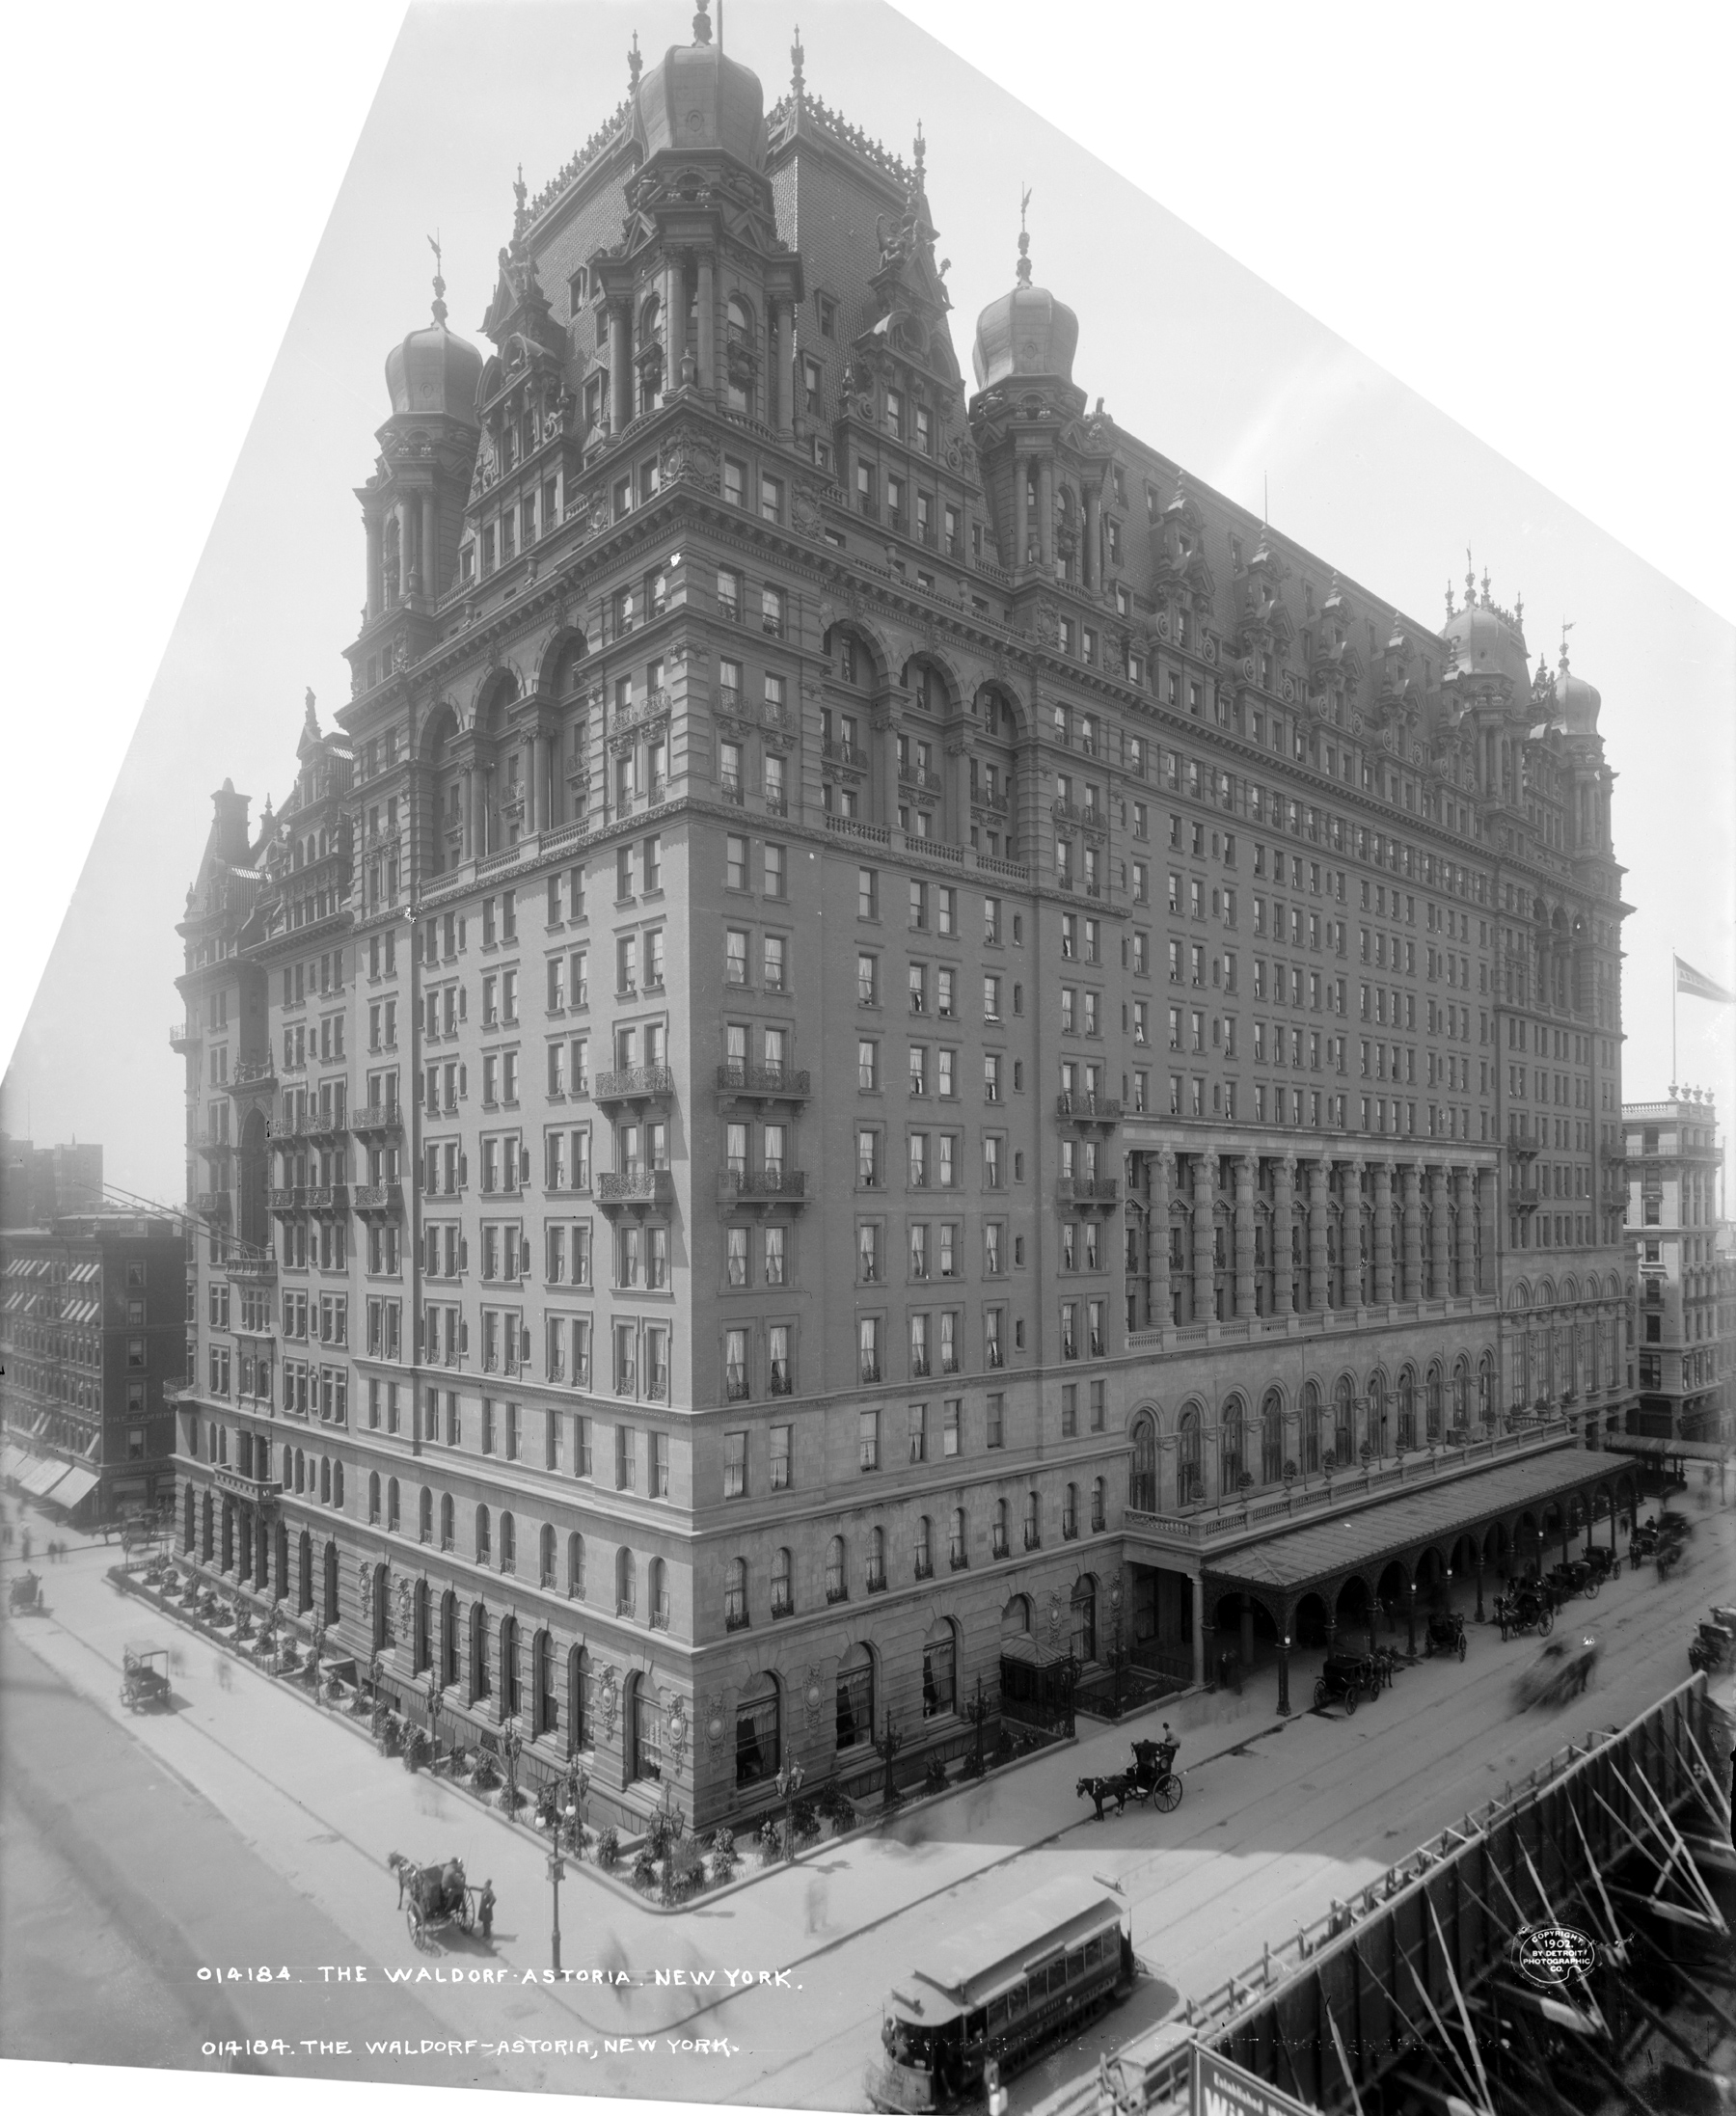 NEW YORK CITY 1930S 11x14 SILVER HALIDE PHOTO PRINT WALDORF ASTORIA HOTEL 